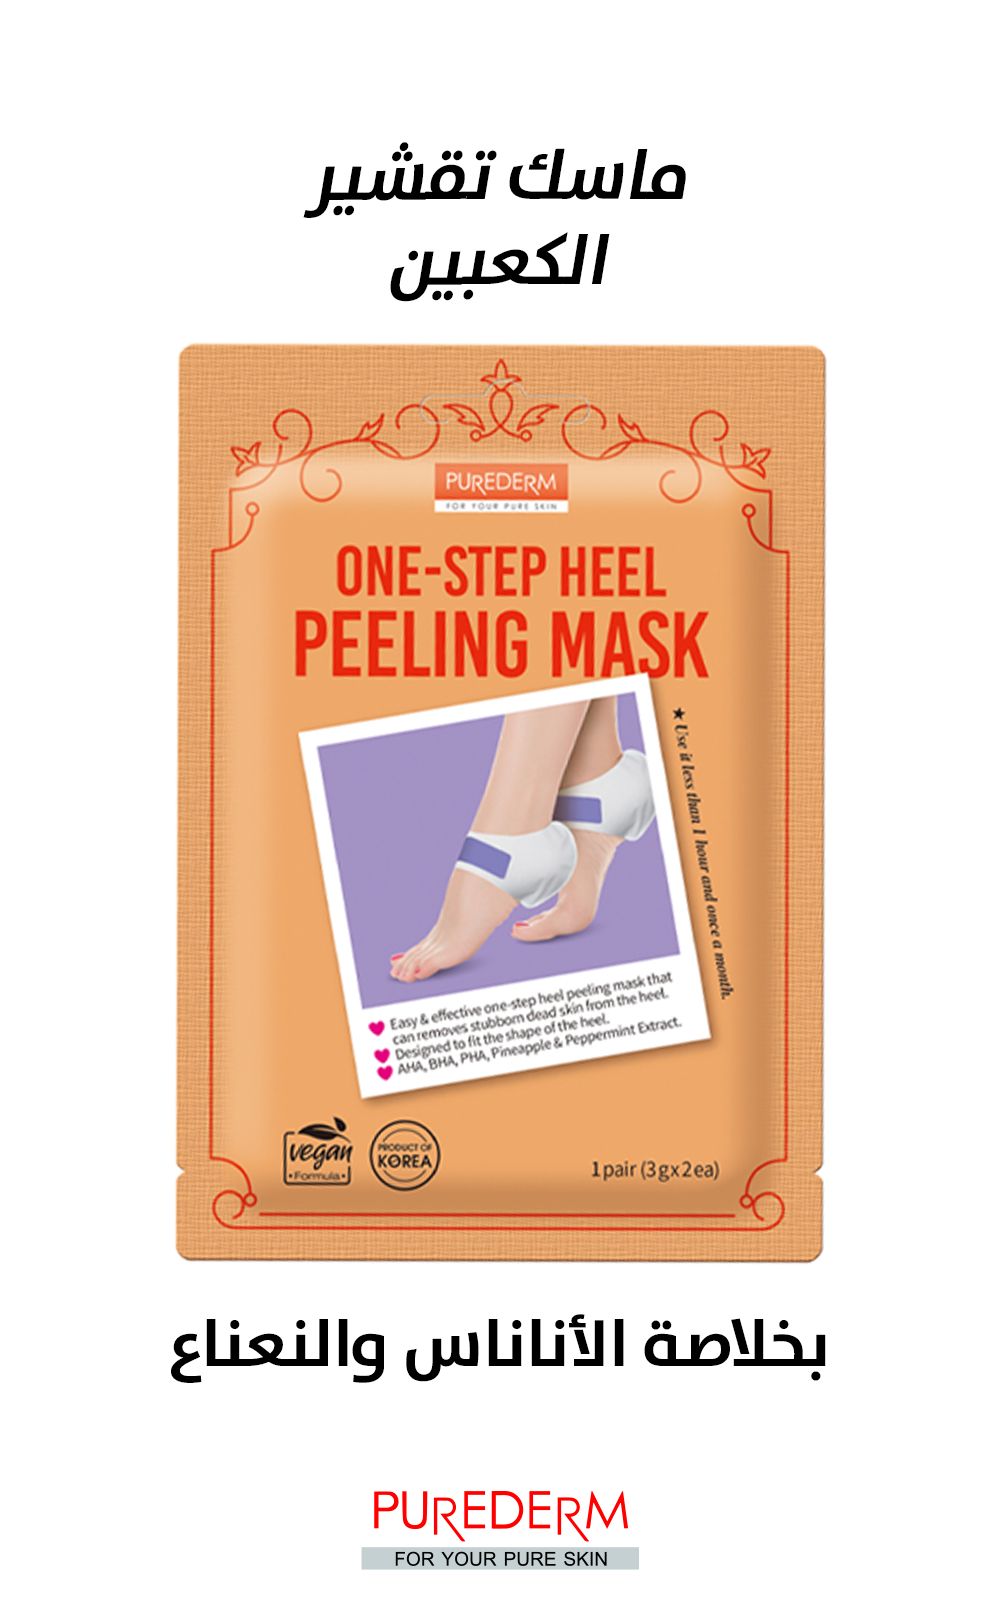 Purederm one-step heel peeling mask